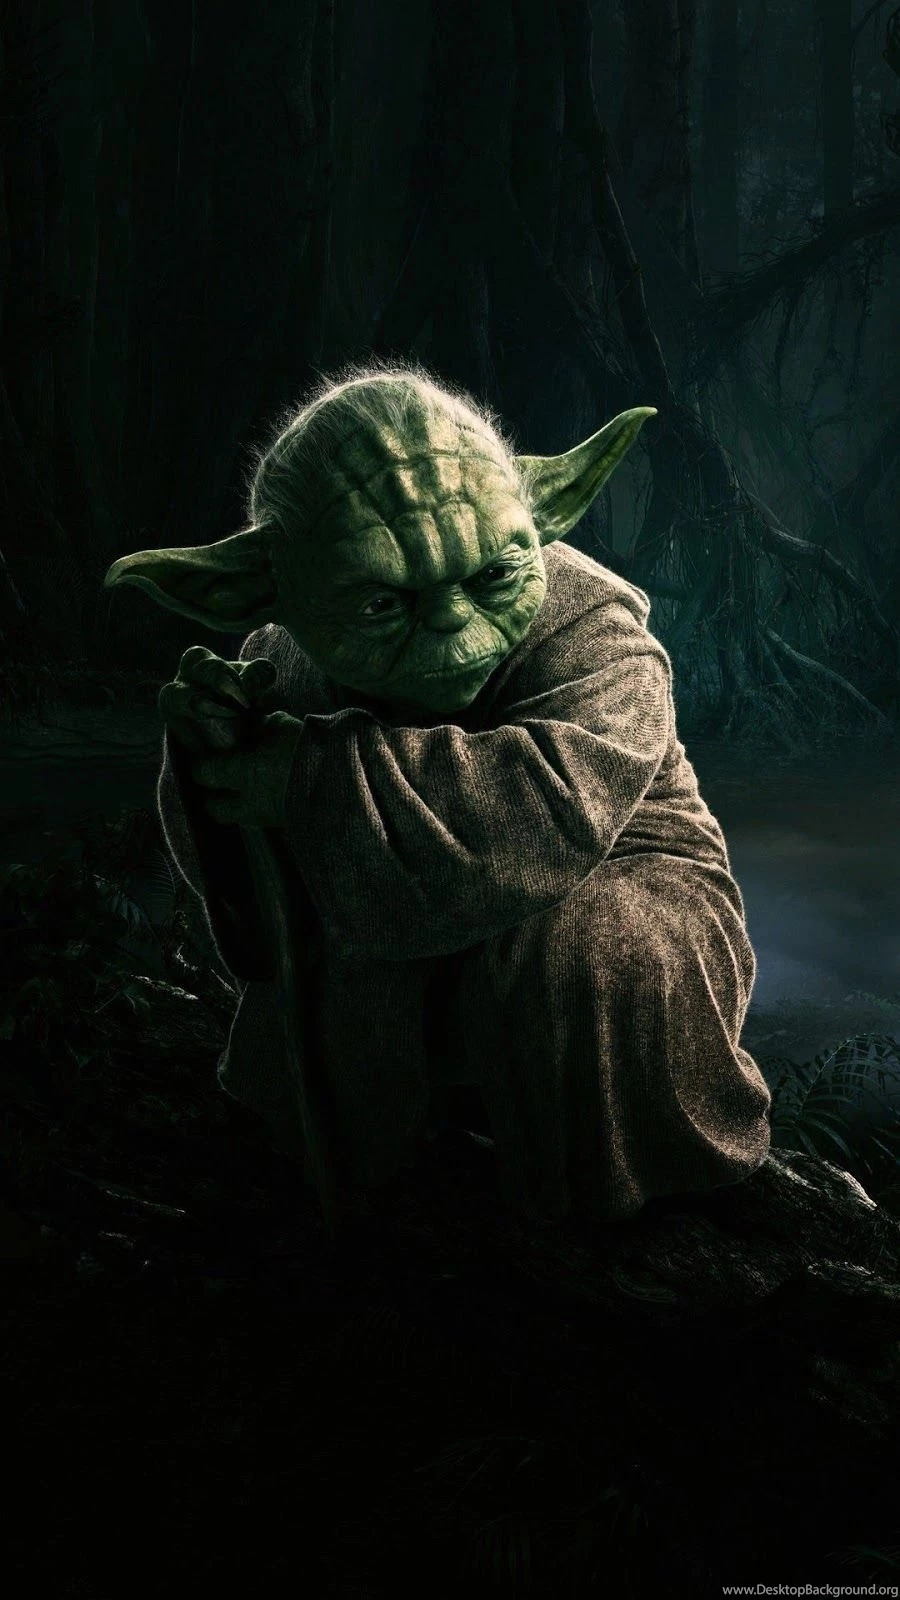 Yoda Illustration Star Wars 1080p Movie Wallpapers Hd Wallpapers Desktop Background